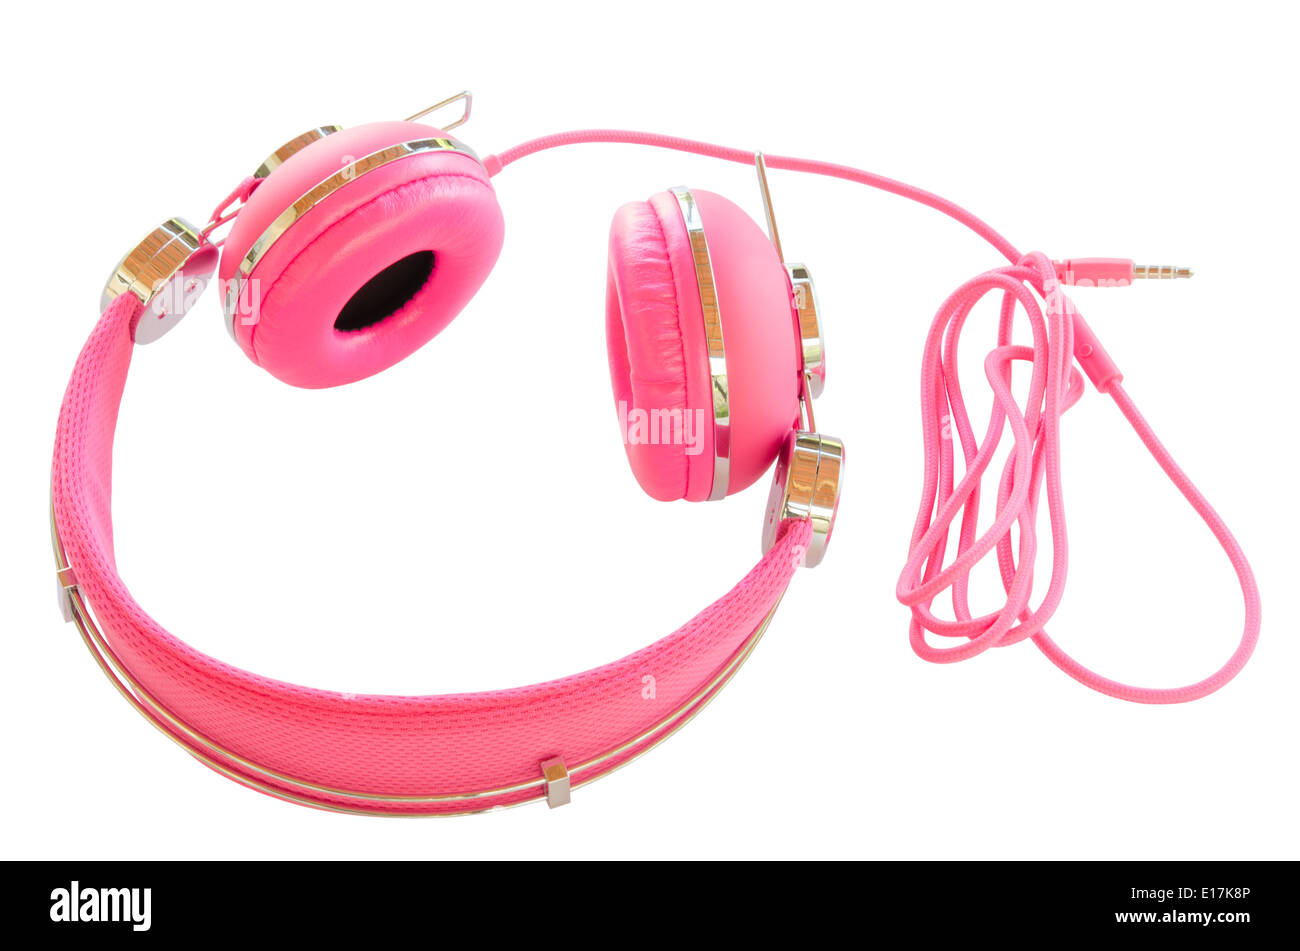 Rosa intensos coloridos auriculares con cable aislado en blanco Foto de stock